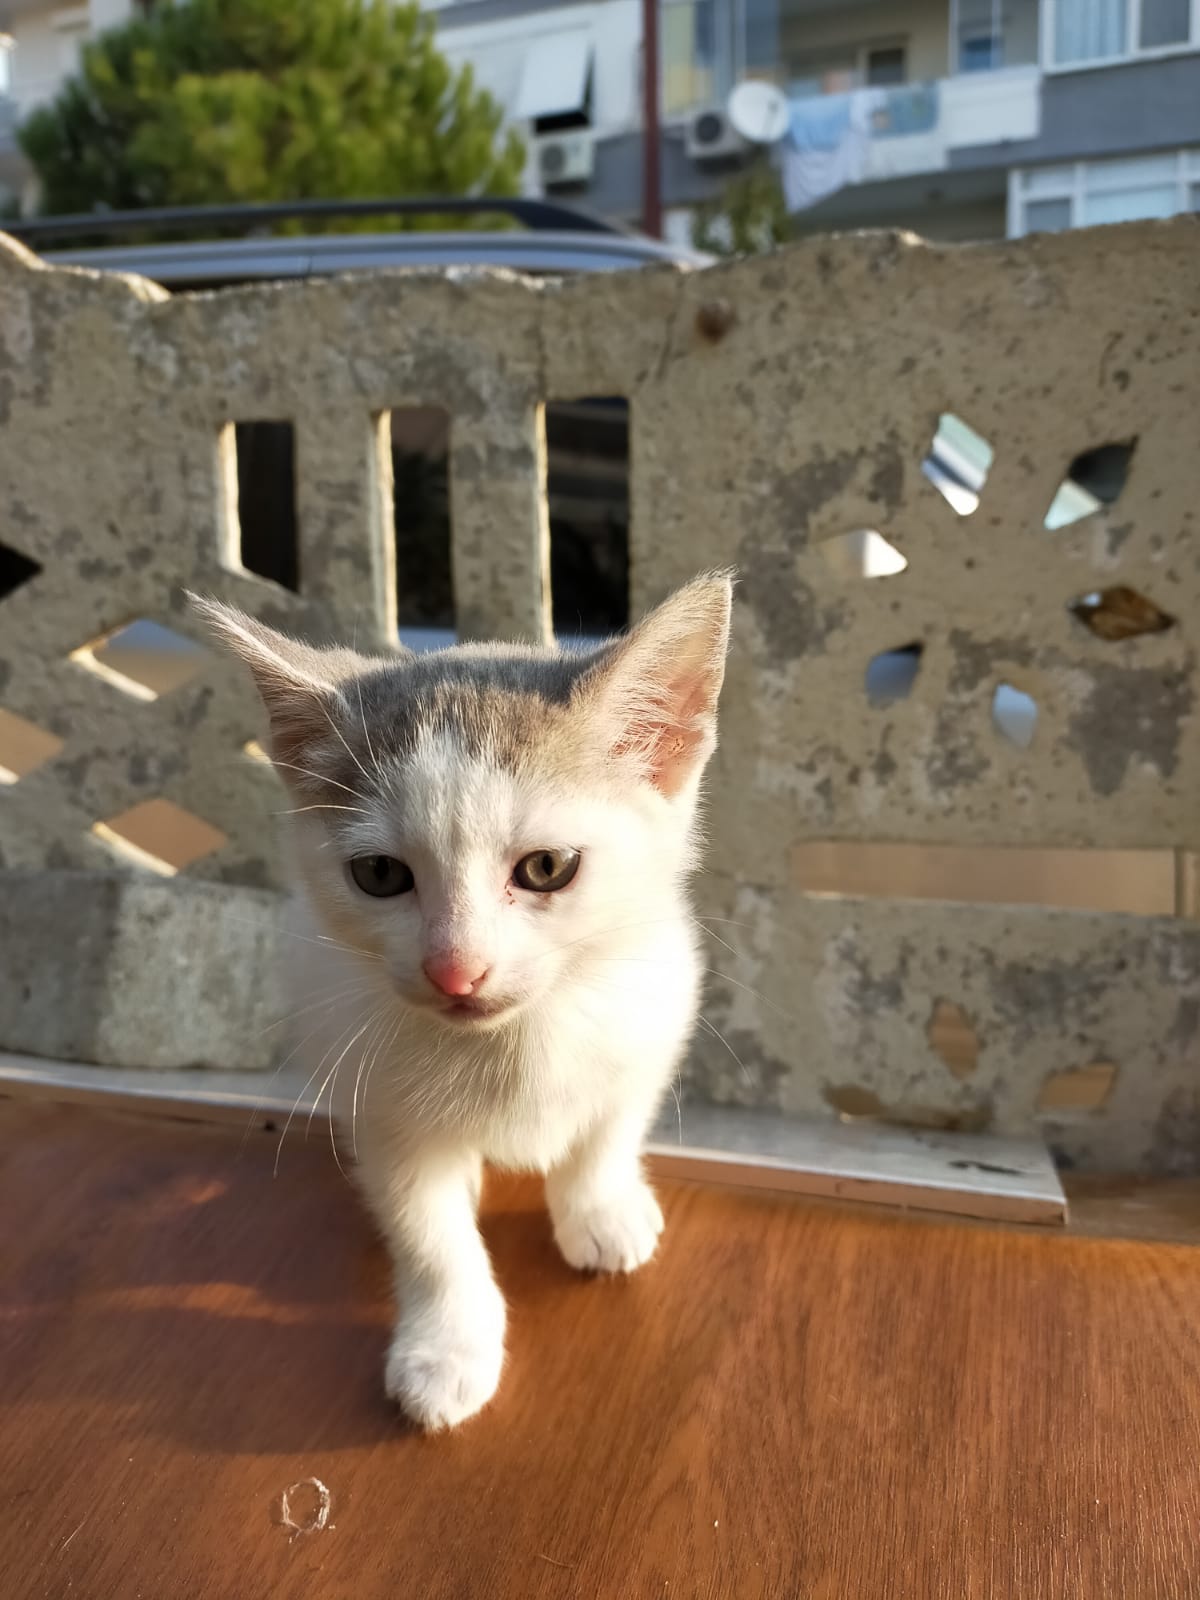 Minik Pamuk Kıza Ömür, Ücretsiz Kedi, İzmir